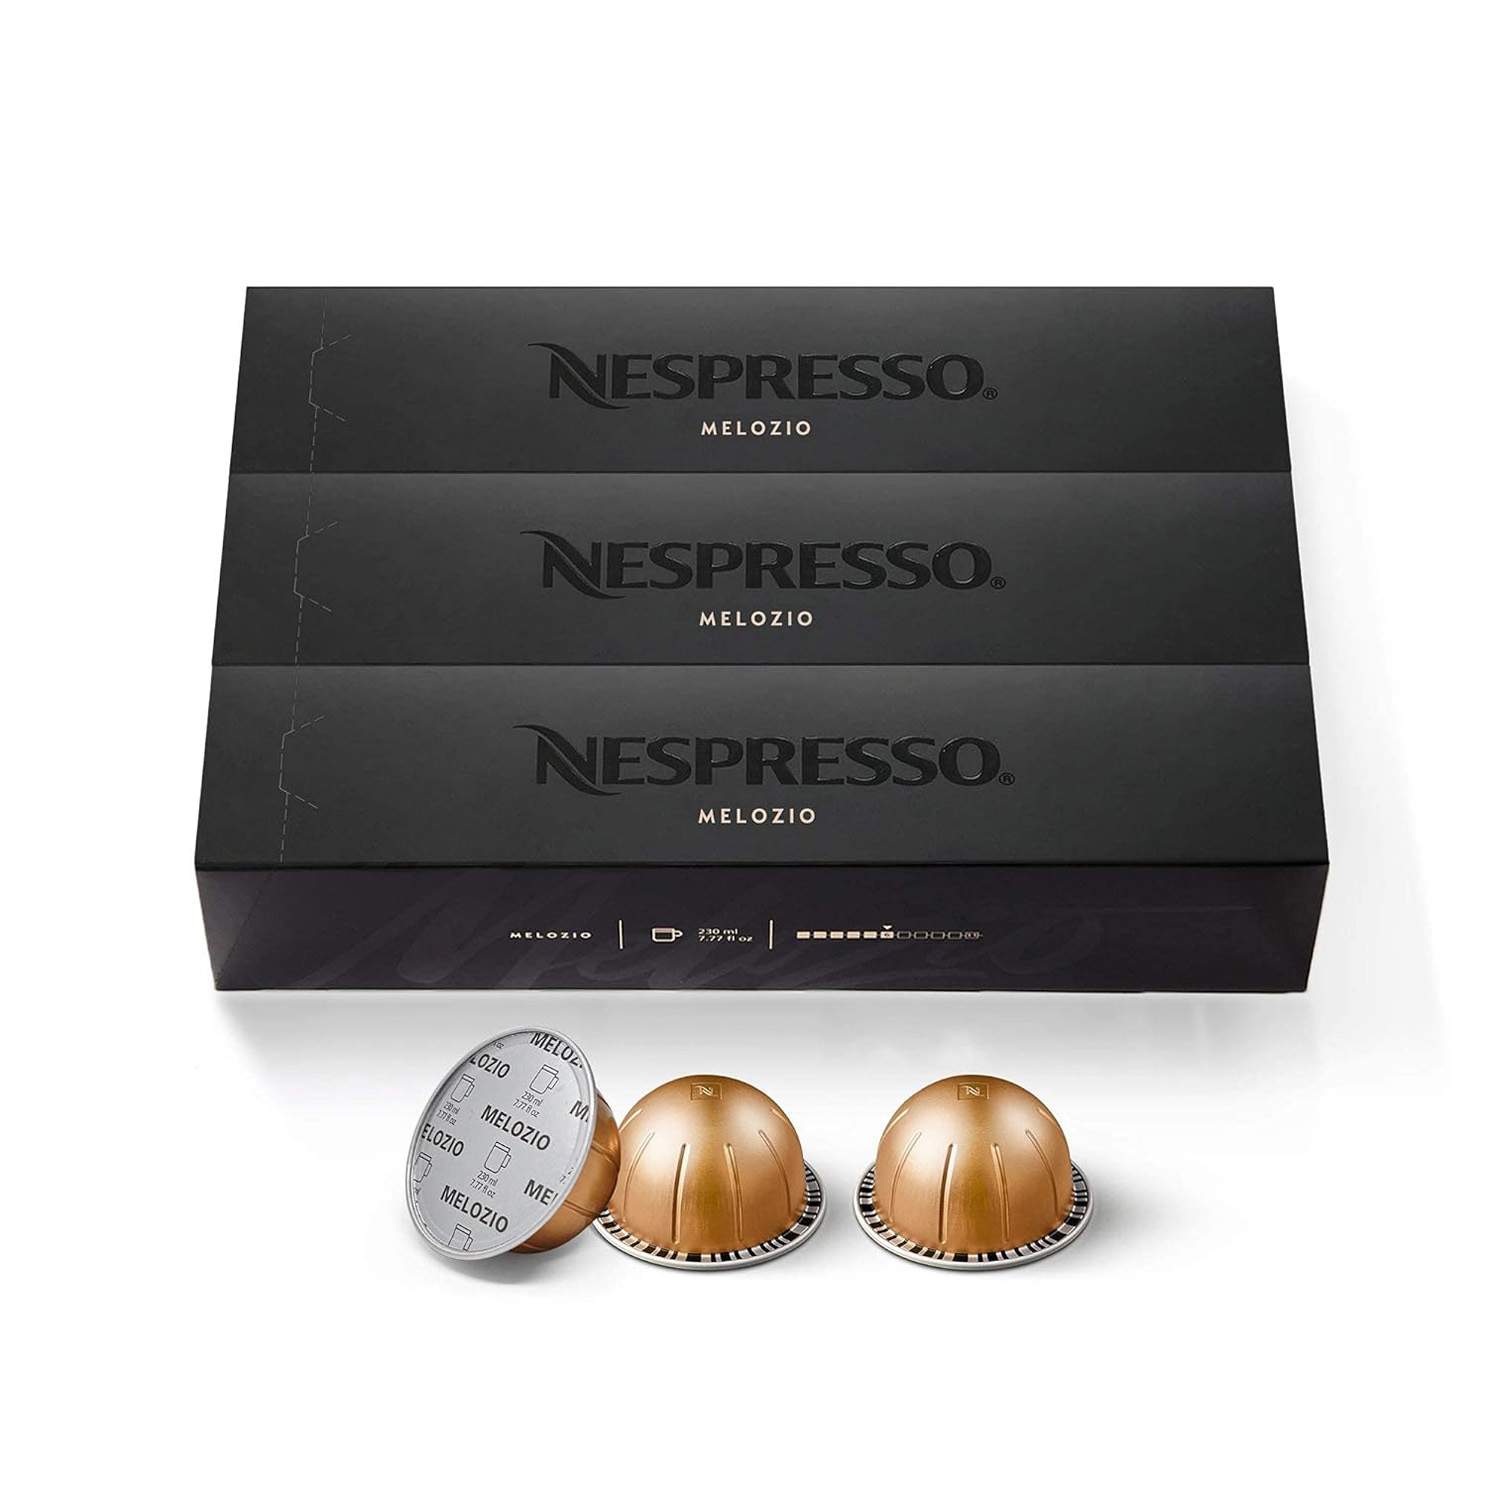 Nestle Nespresso Capsules VertuoLine, Melozio, Medium Roast Coffee